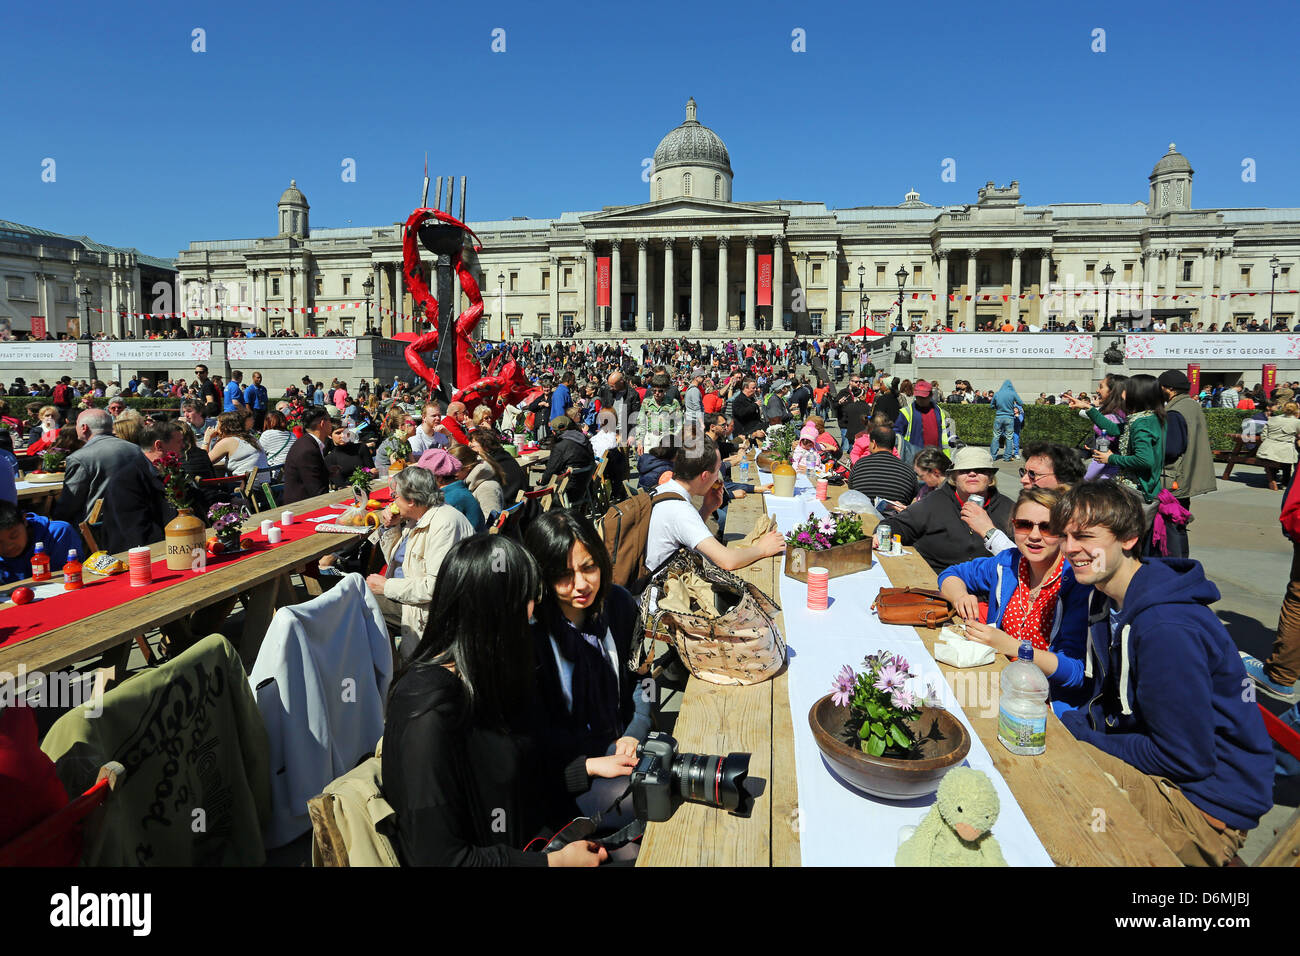 London, UK. 20th April 2013. St. George's Day Celebrations in Trafalgar Square, London. Credit: Paul Brown/ Alamy Live News Stock Photo